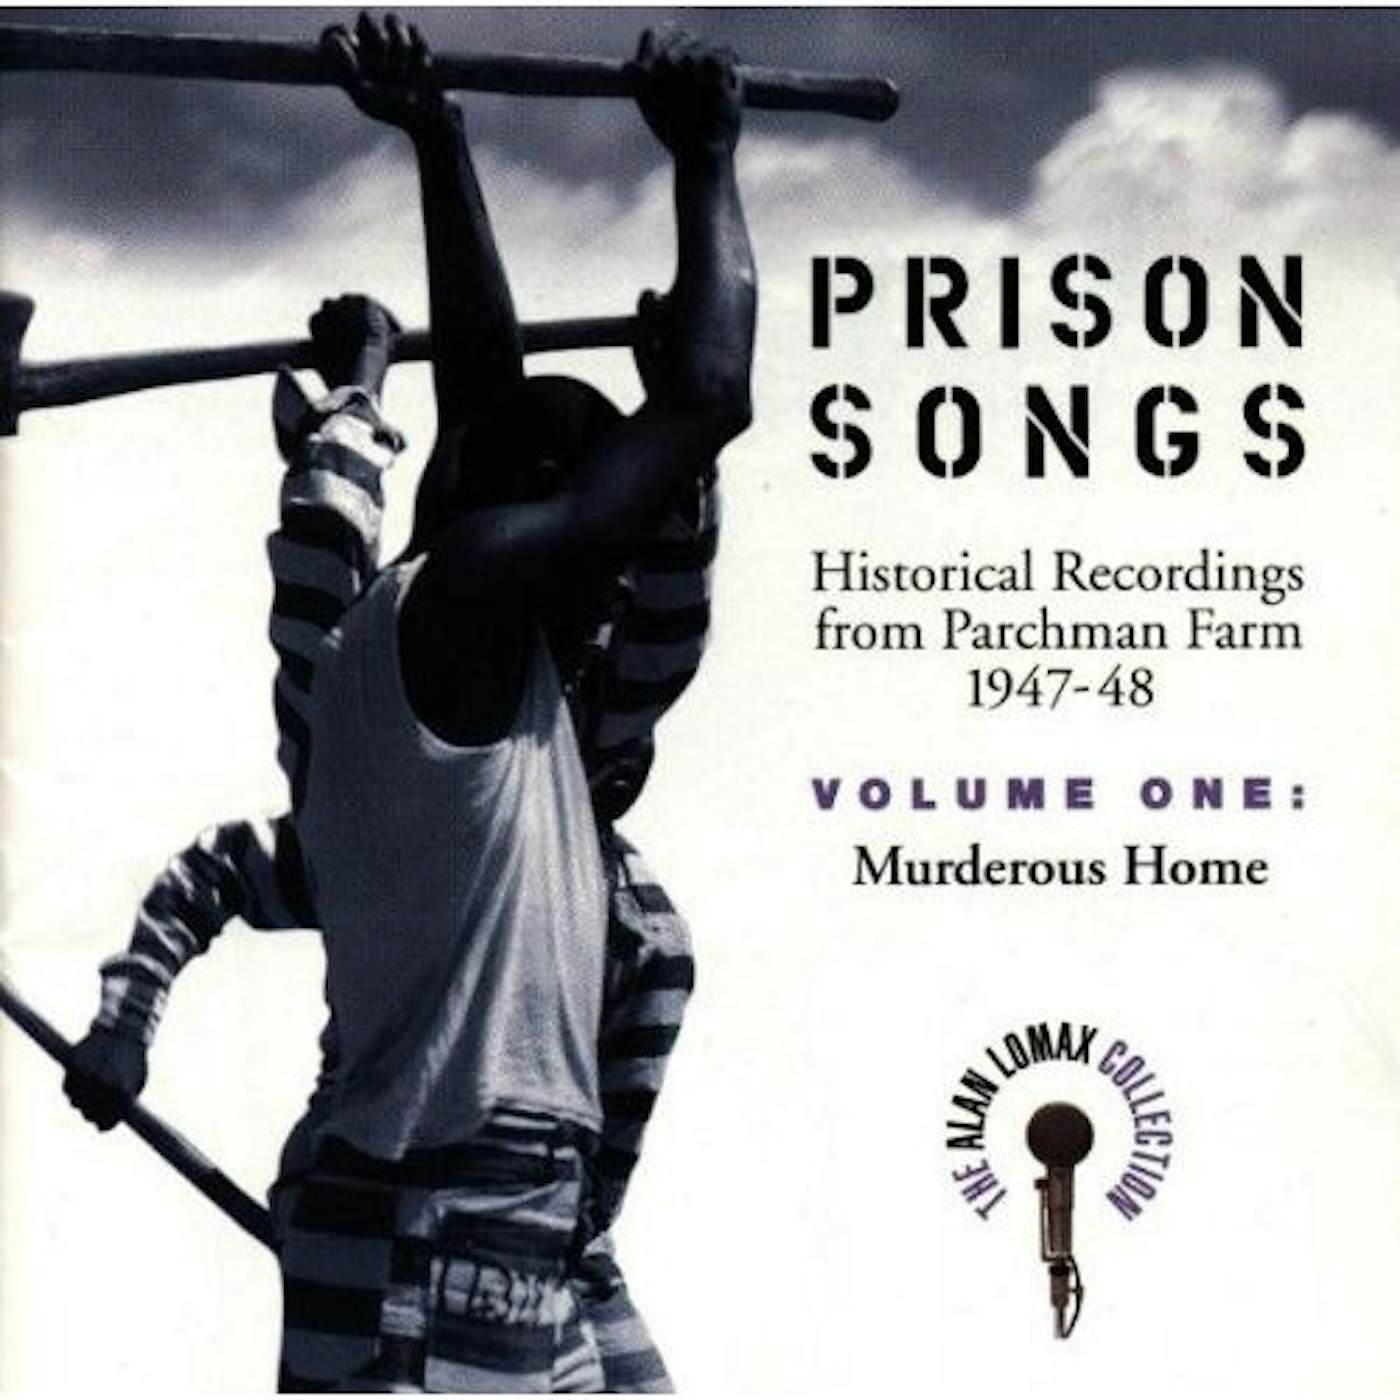 Alan Lomax PRISON SONGS 1: MURDEROUS HOME CD